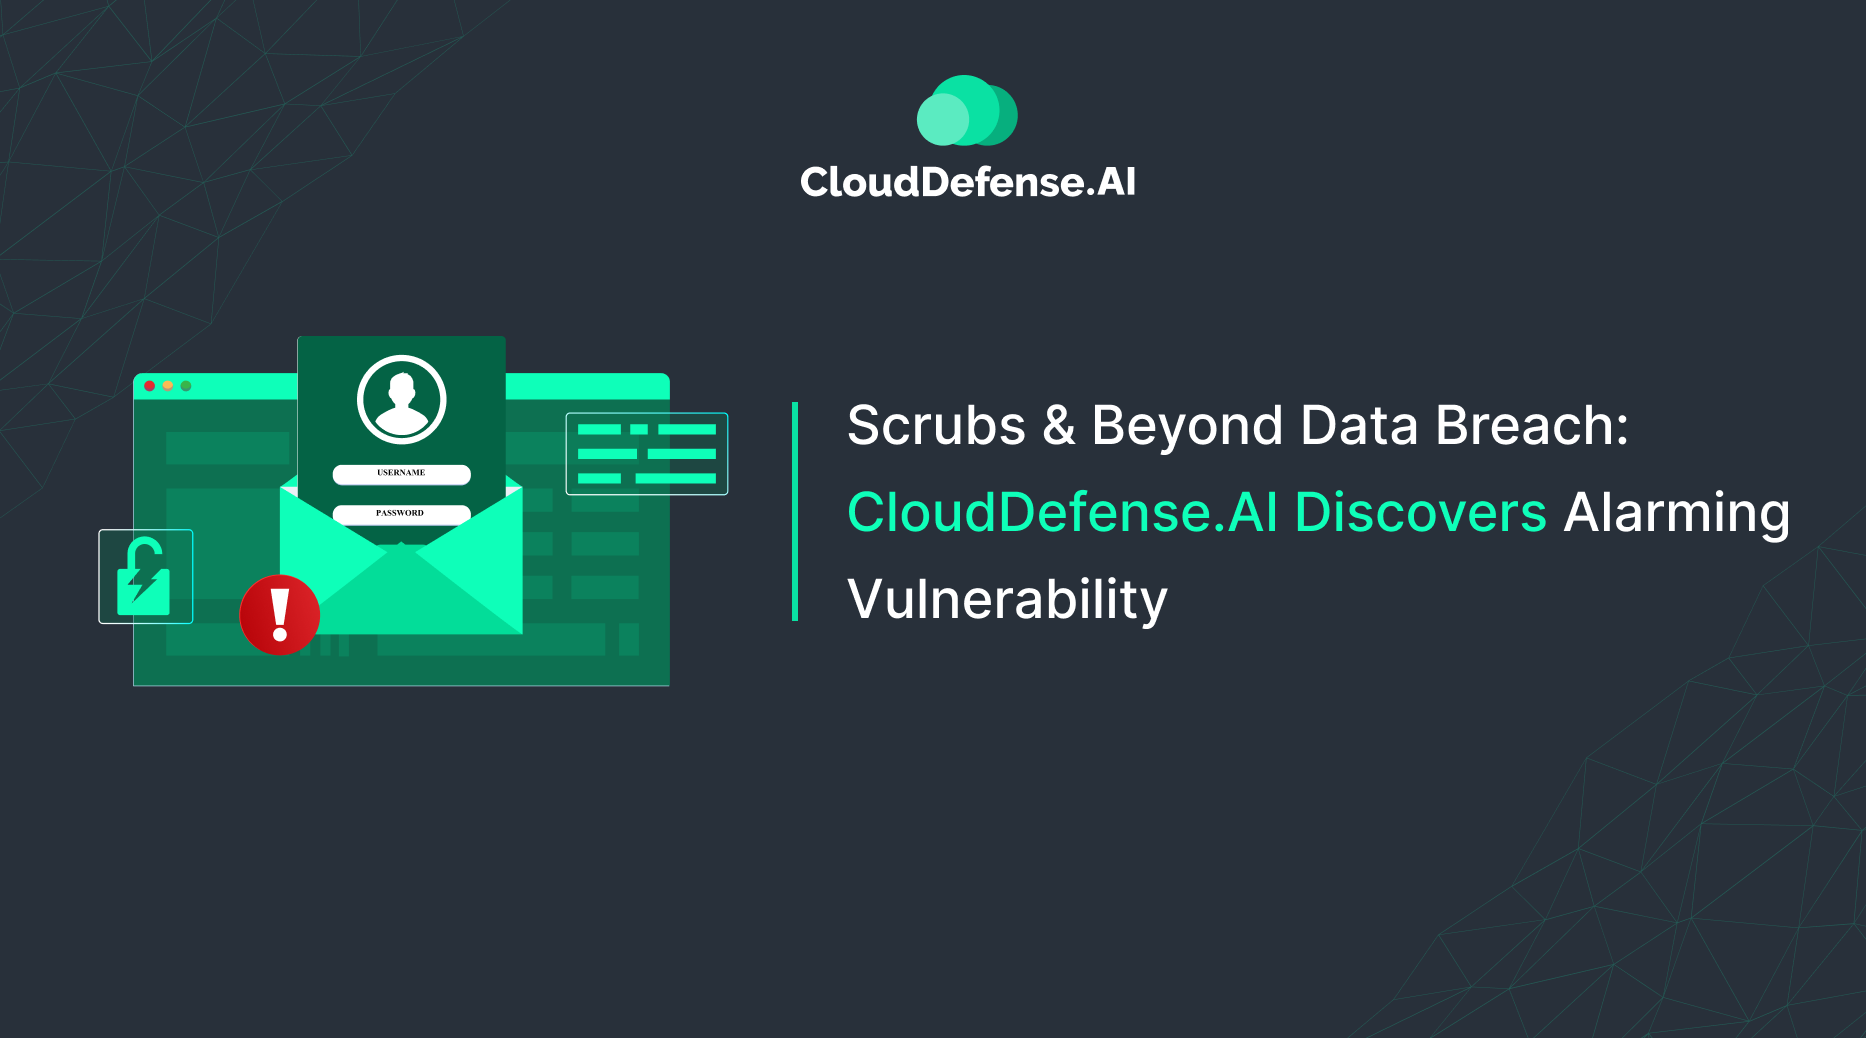 Scrubs & Beyond Data Breach: CloudDefense.AI Discovers Alarming Vulnerability